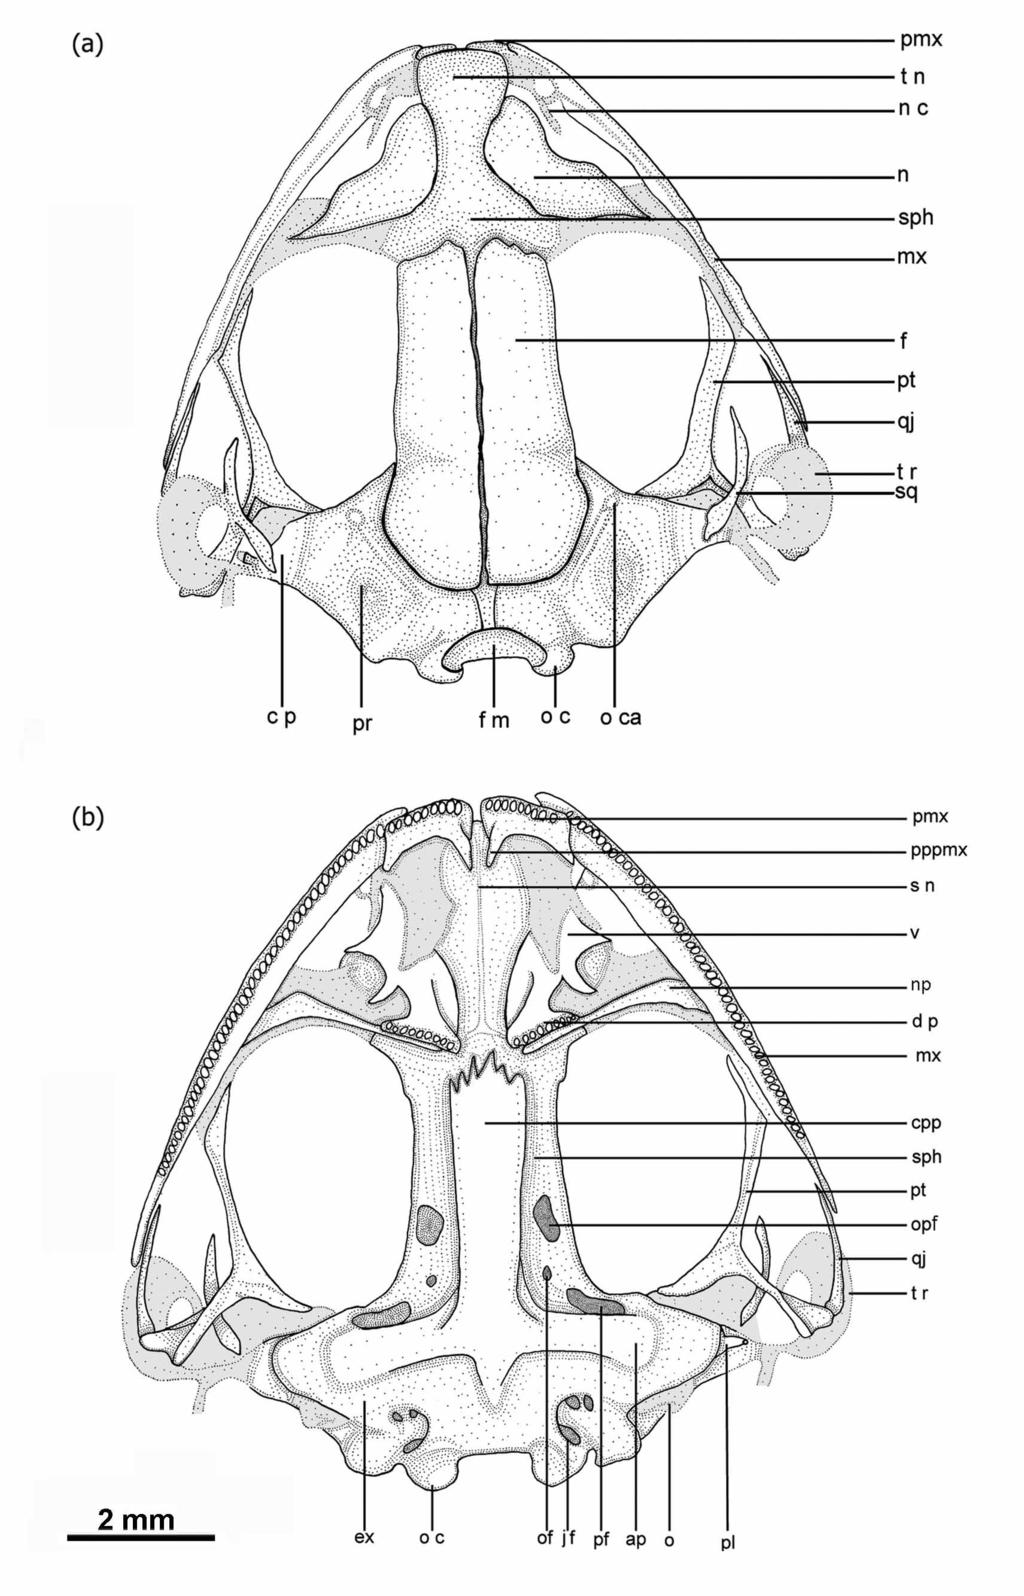 FIGURE 1. Skull of OTU 1, QCAZ 6192 from Ecuador (male specimen) (a) Dorsal view; (b) Ventral view.